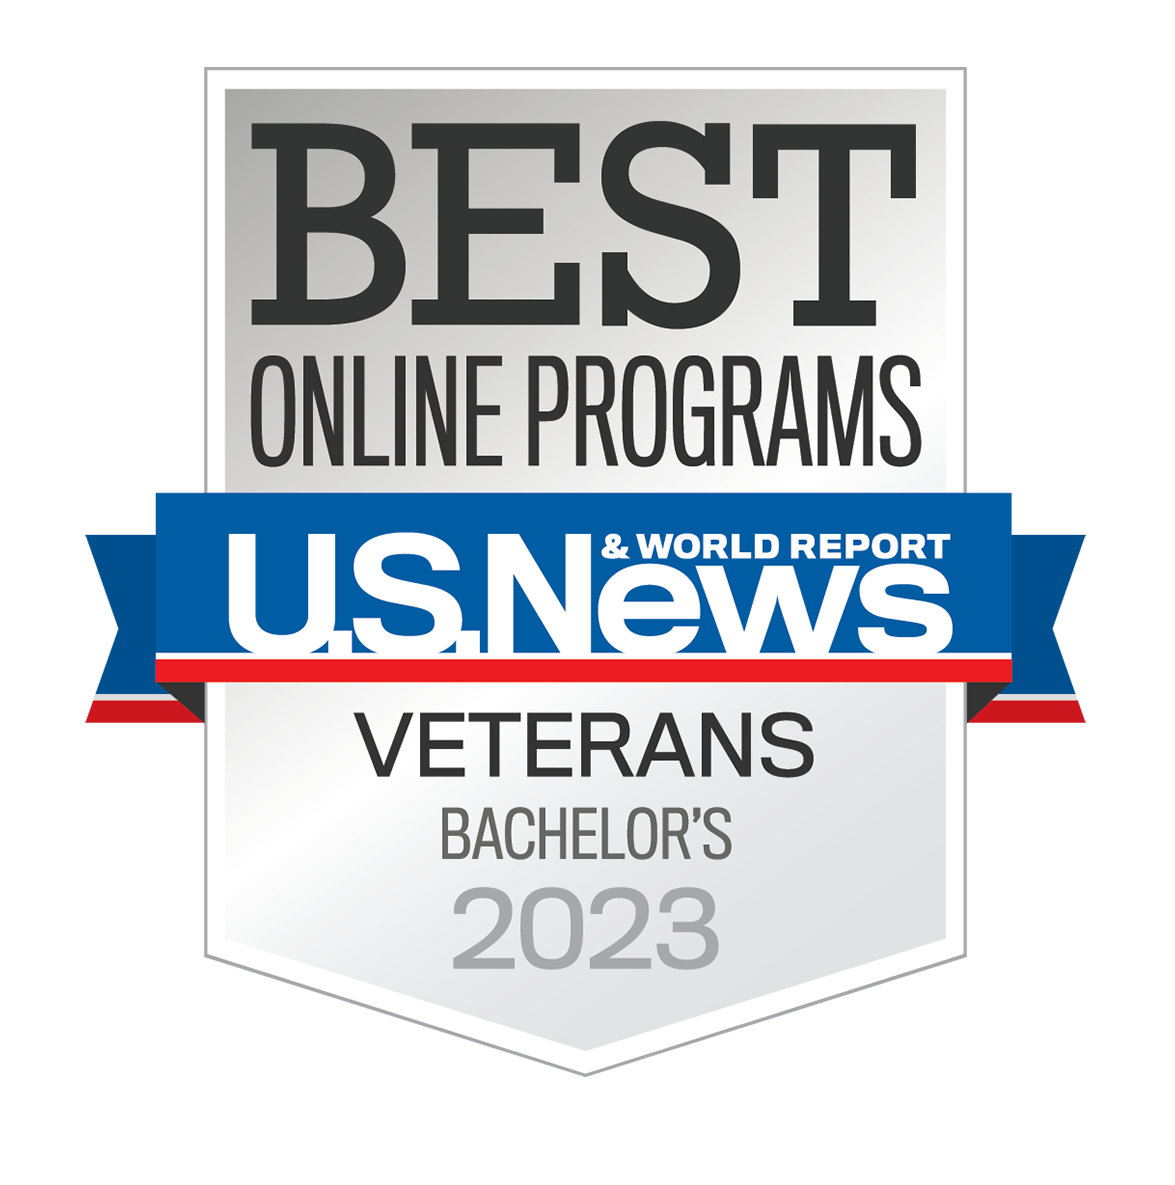 U.S. New and world reports. Best Online Programs: Veterans Bachelors 2023